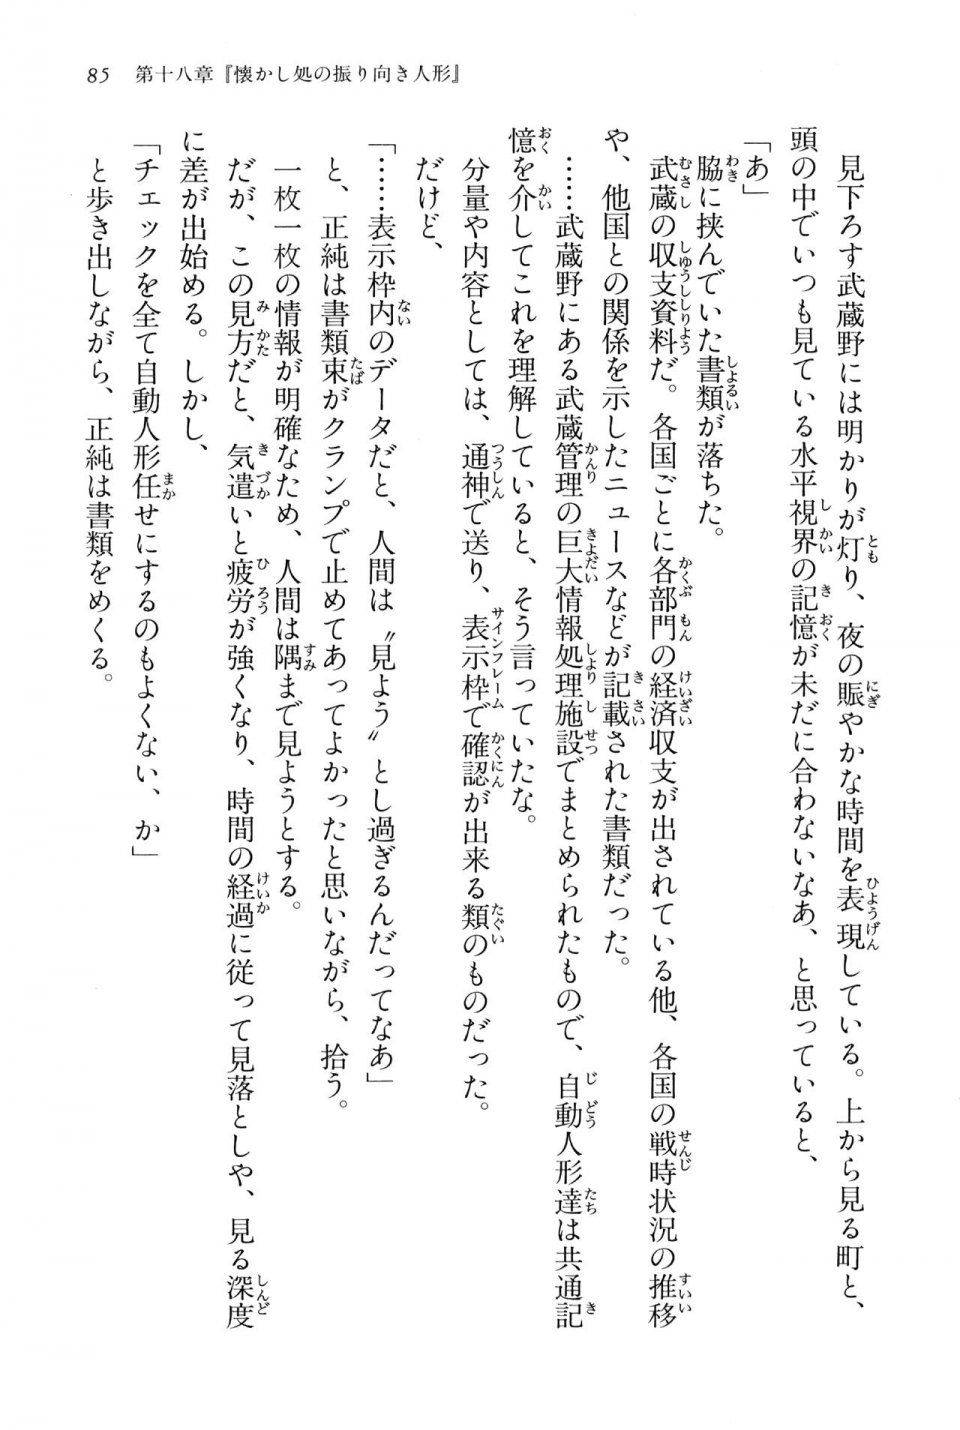 Kyoukai Senjou no Horizon BD Special Mininovel Vol 4(2B) - Photo #89